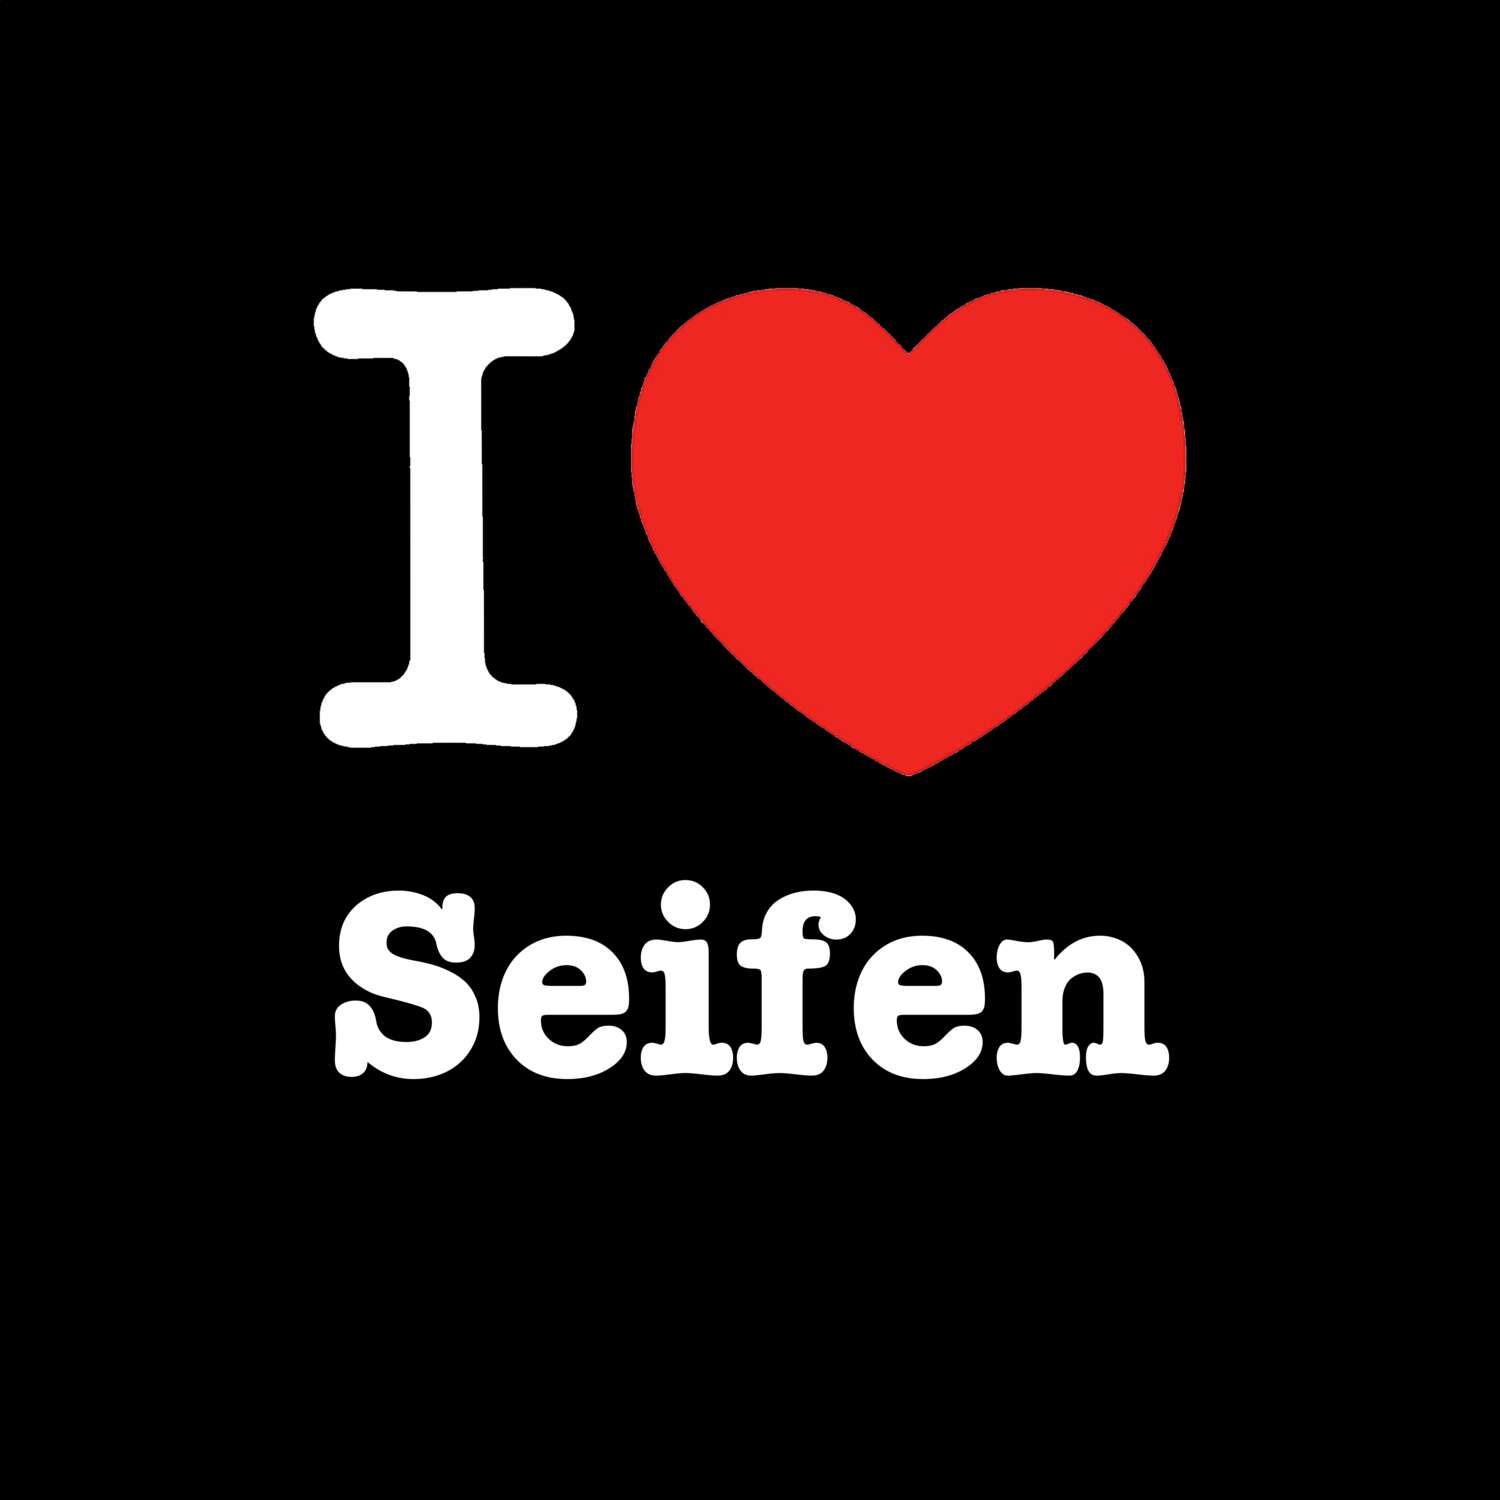 Seifen T-Shirt »I love«